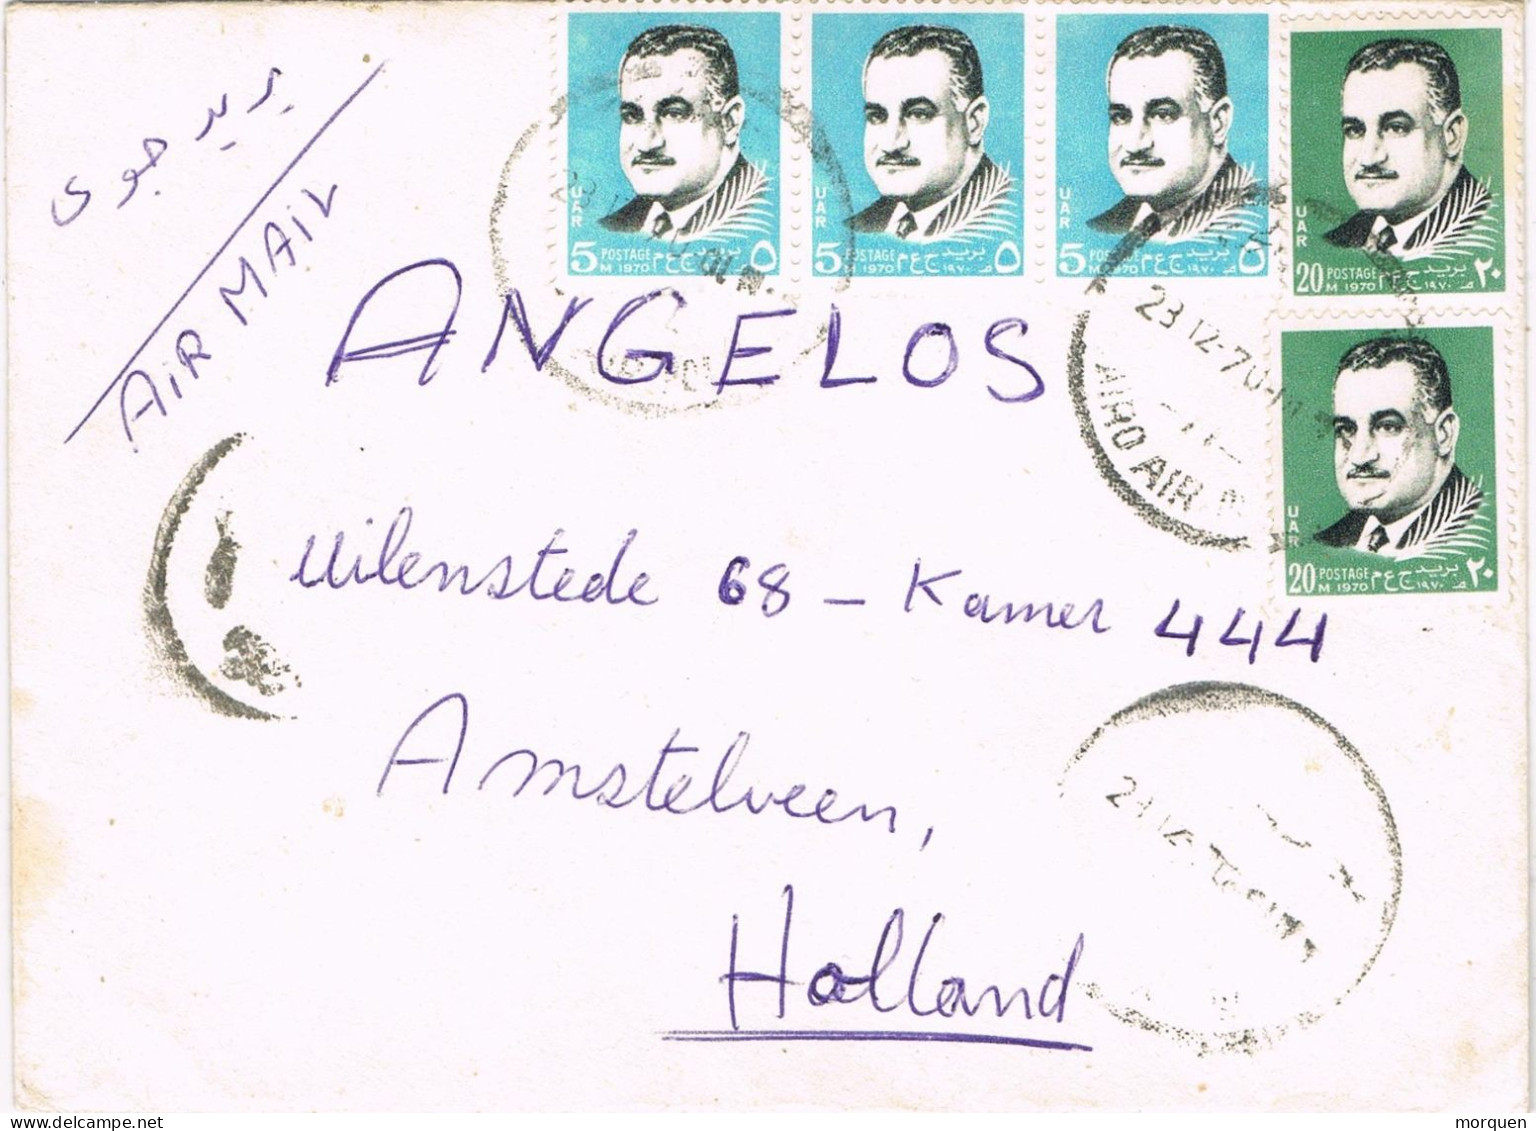 53205. Carta Aerea KOBRY El KOUBBA (Cairo) Egypt 1970. Stamps Nasser - Briefe U. Dokumente